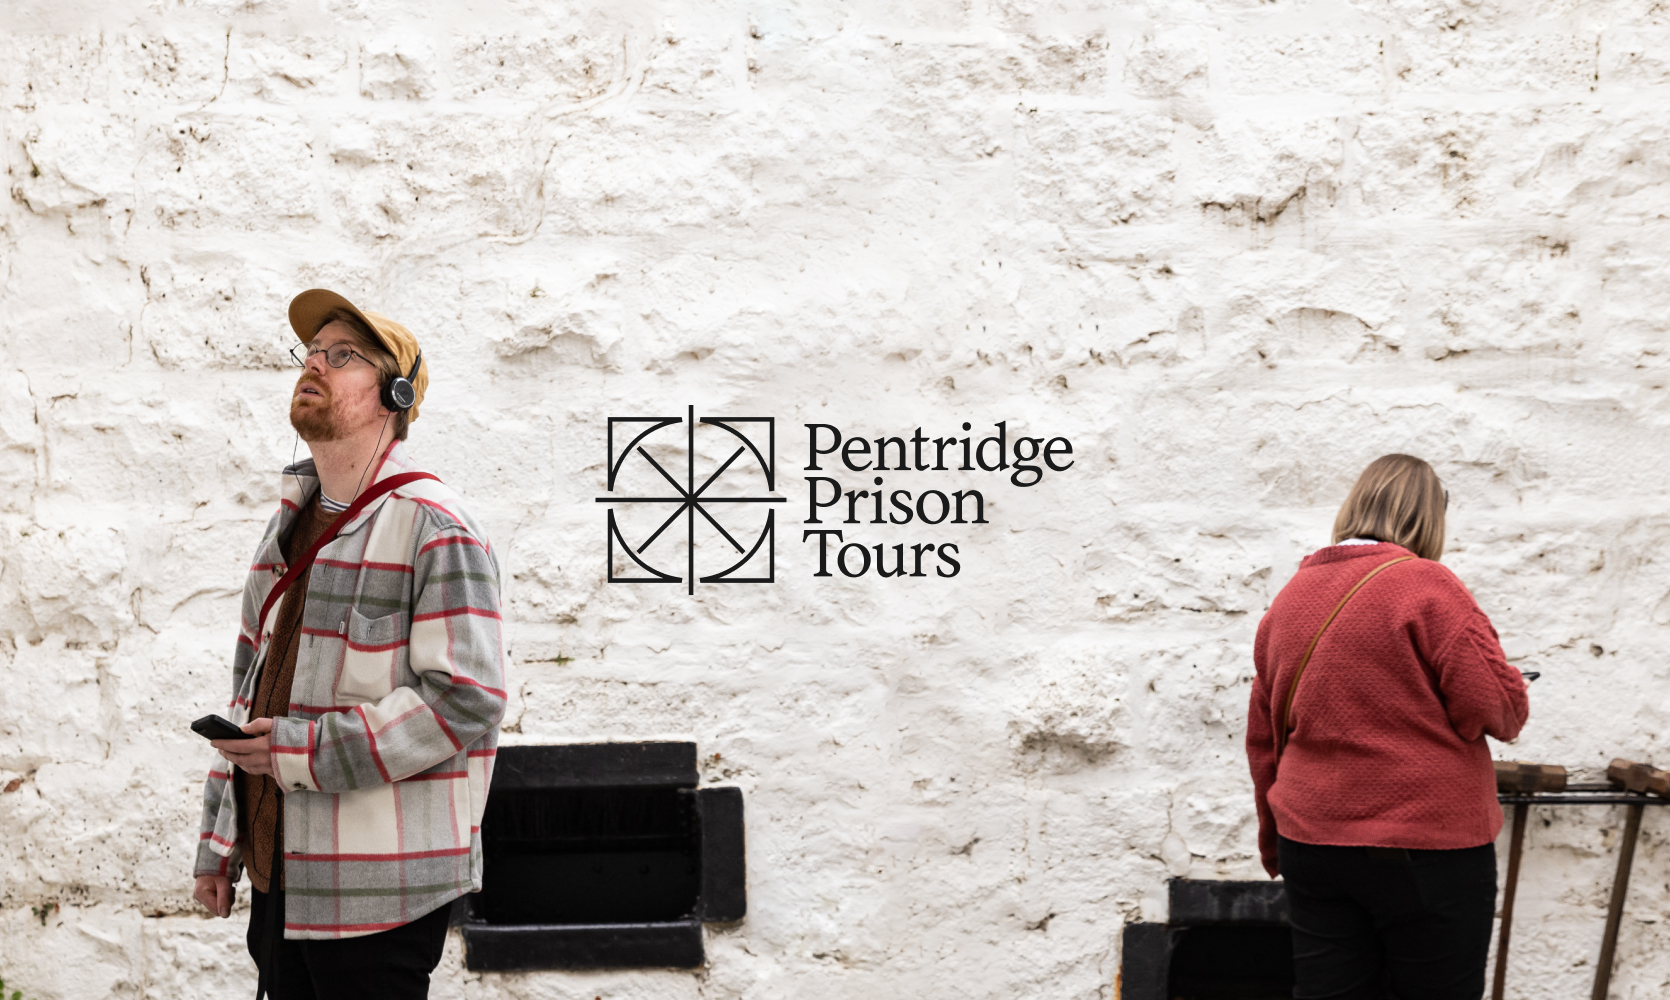 Awards blog image to support Pentridge Tours Wins Good Design Award